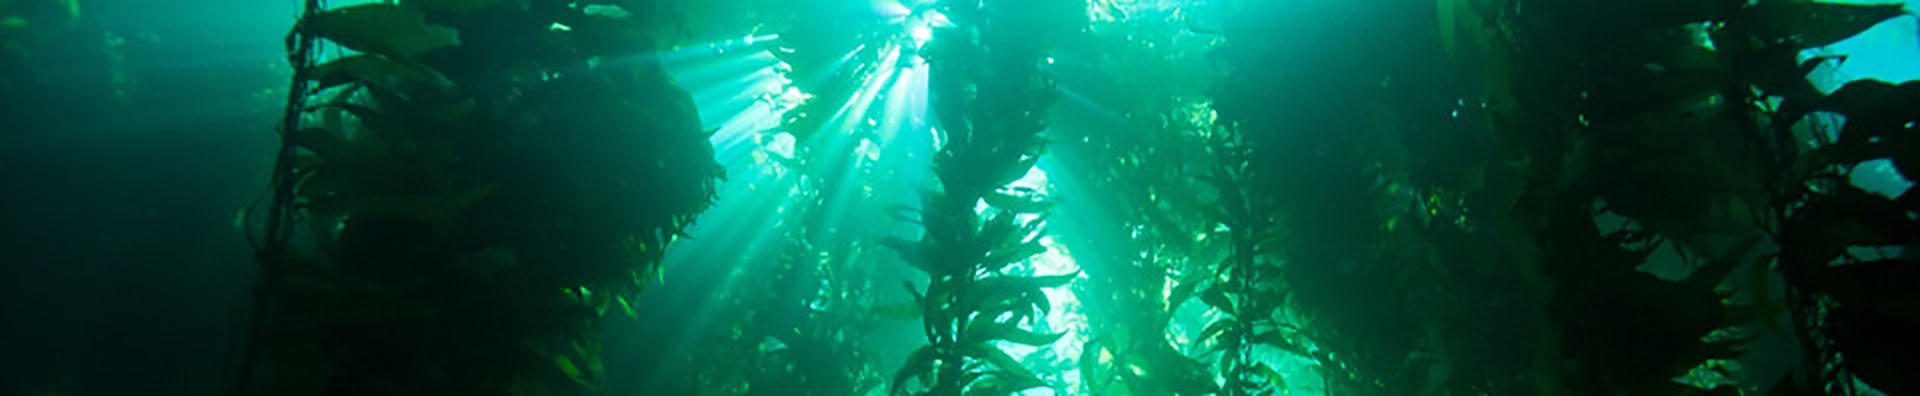 green kelp forest under water view